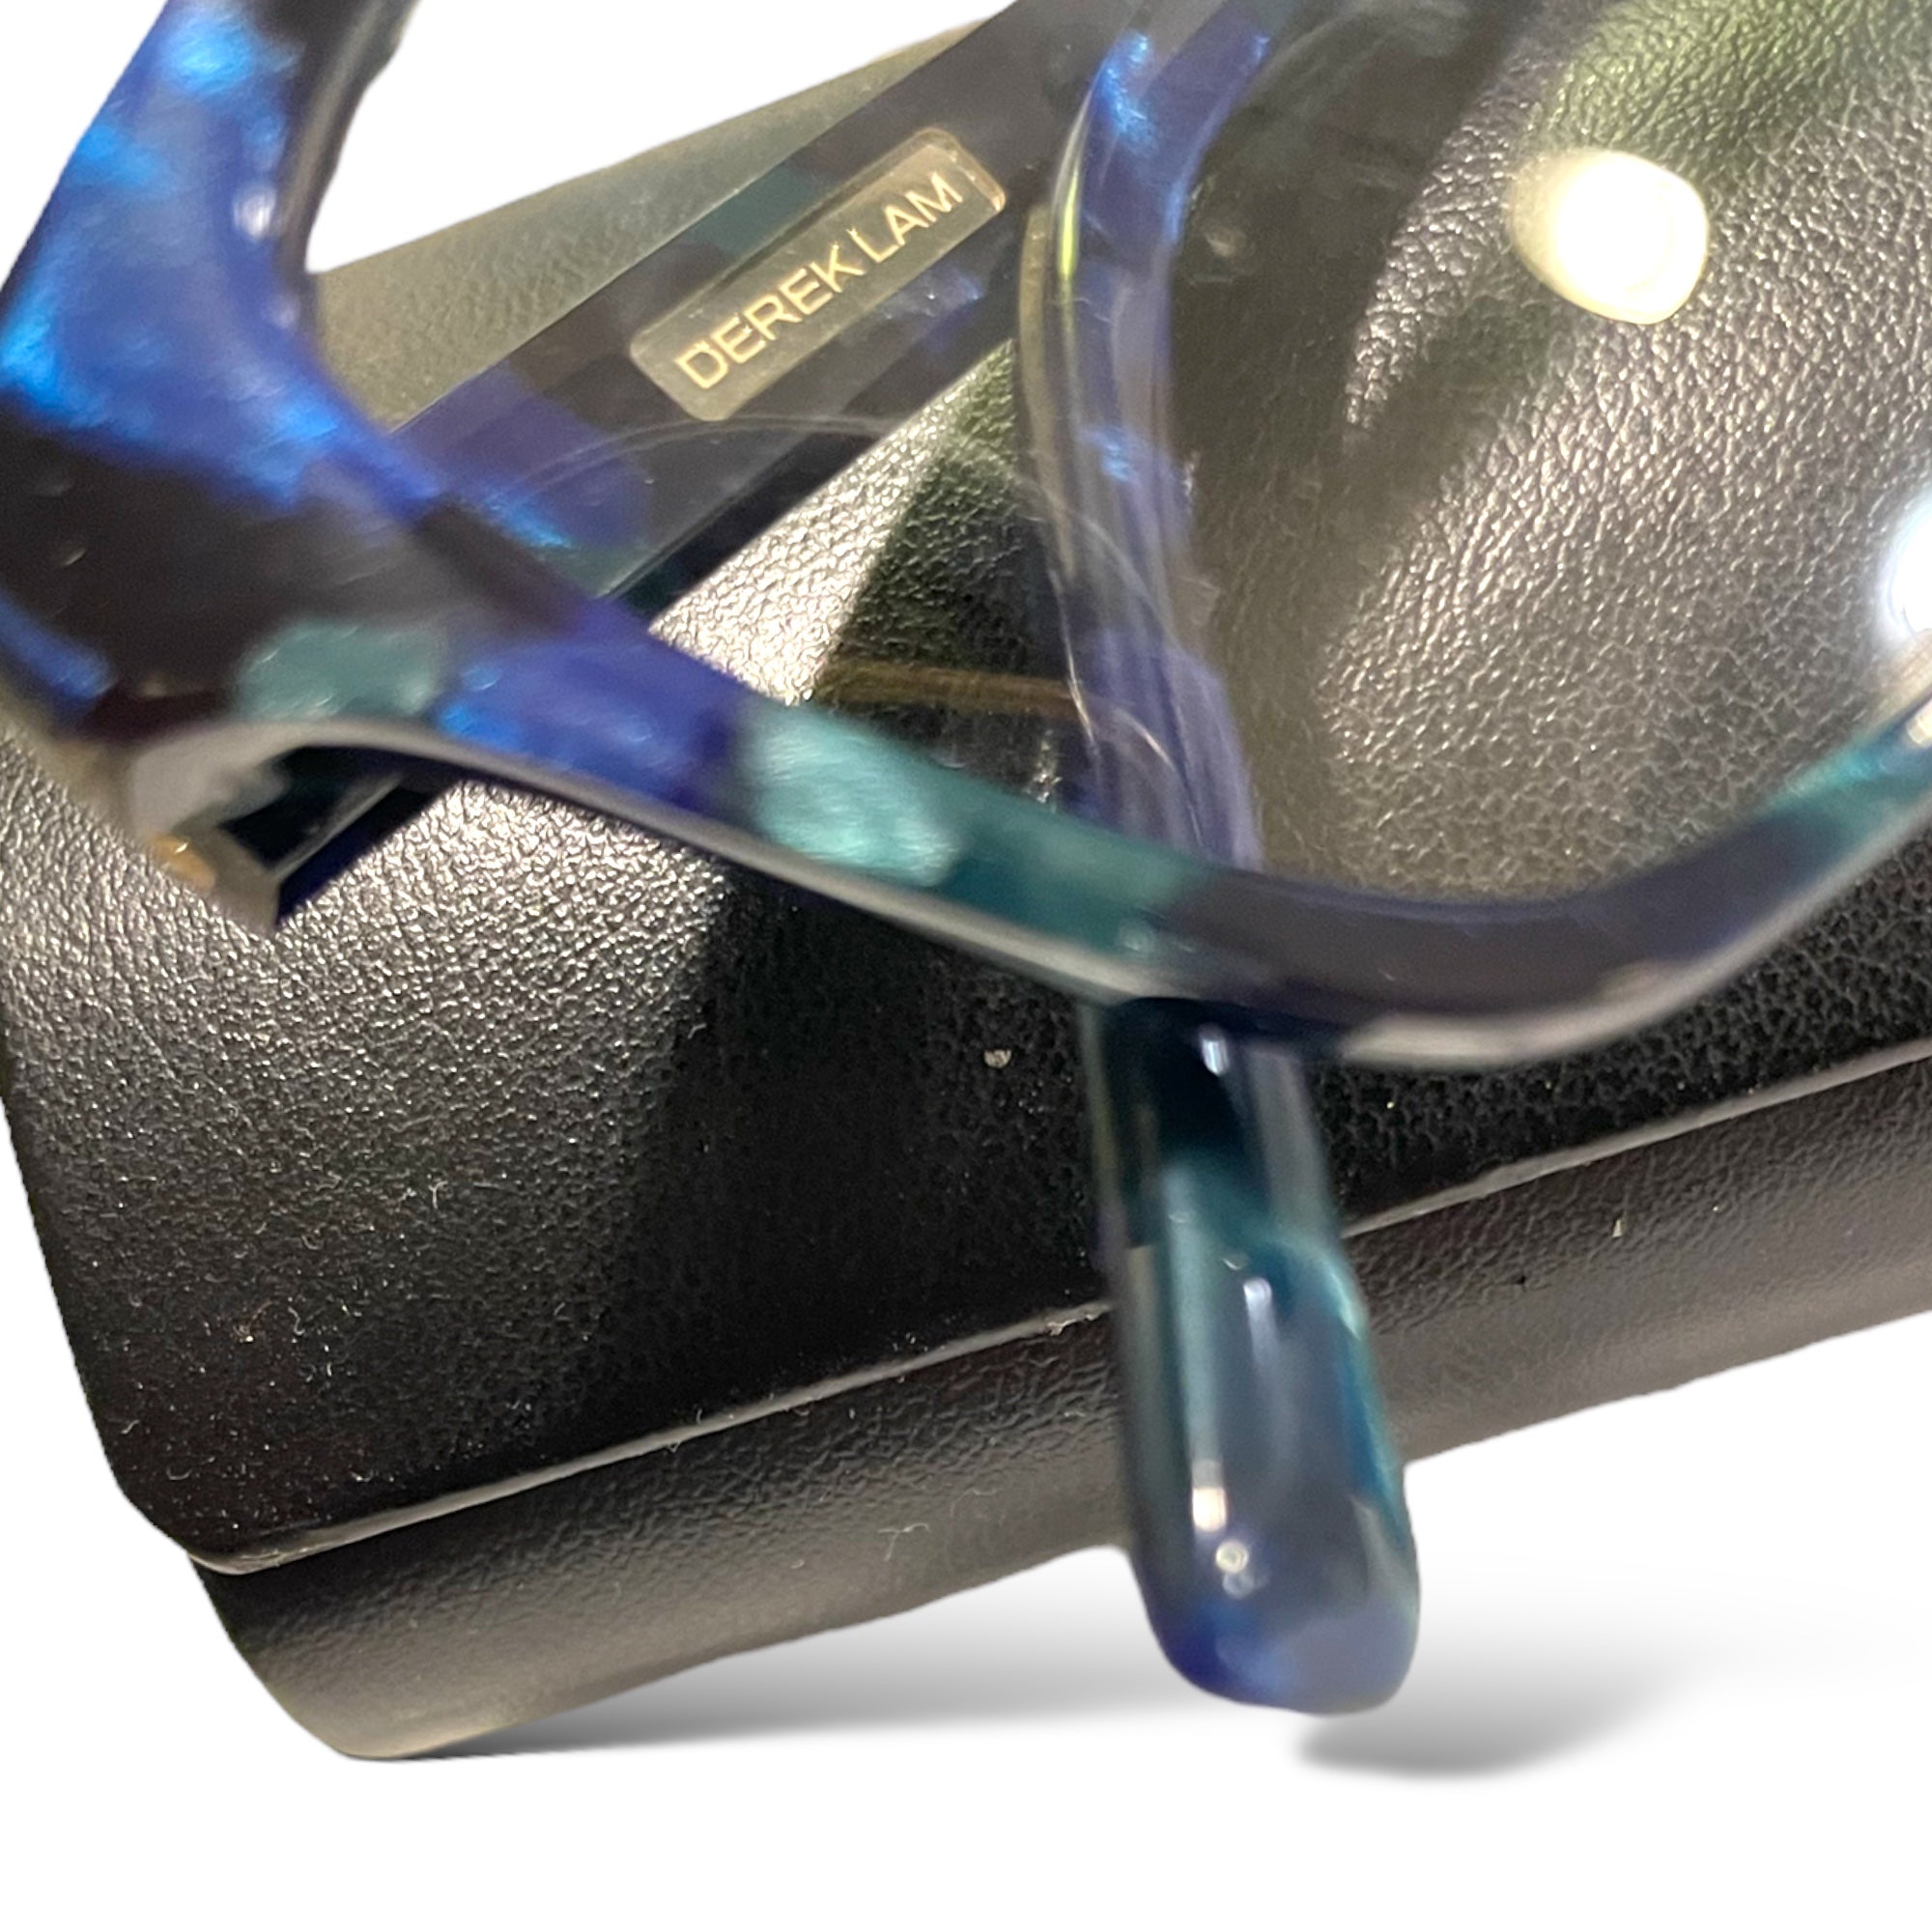 DEREK LAM Navy Tortoise Eyeglass Frames Made in Japan